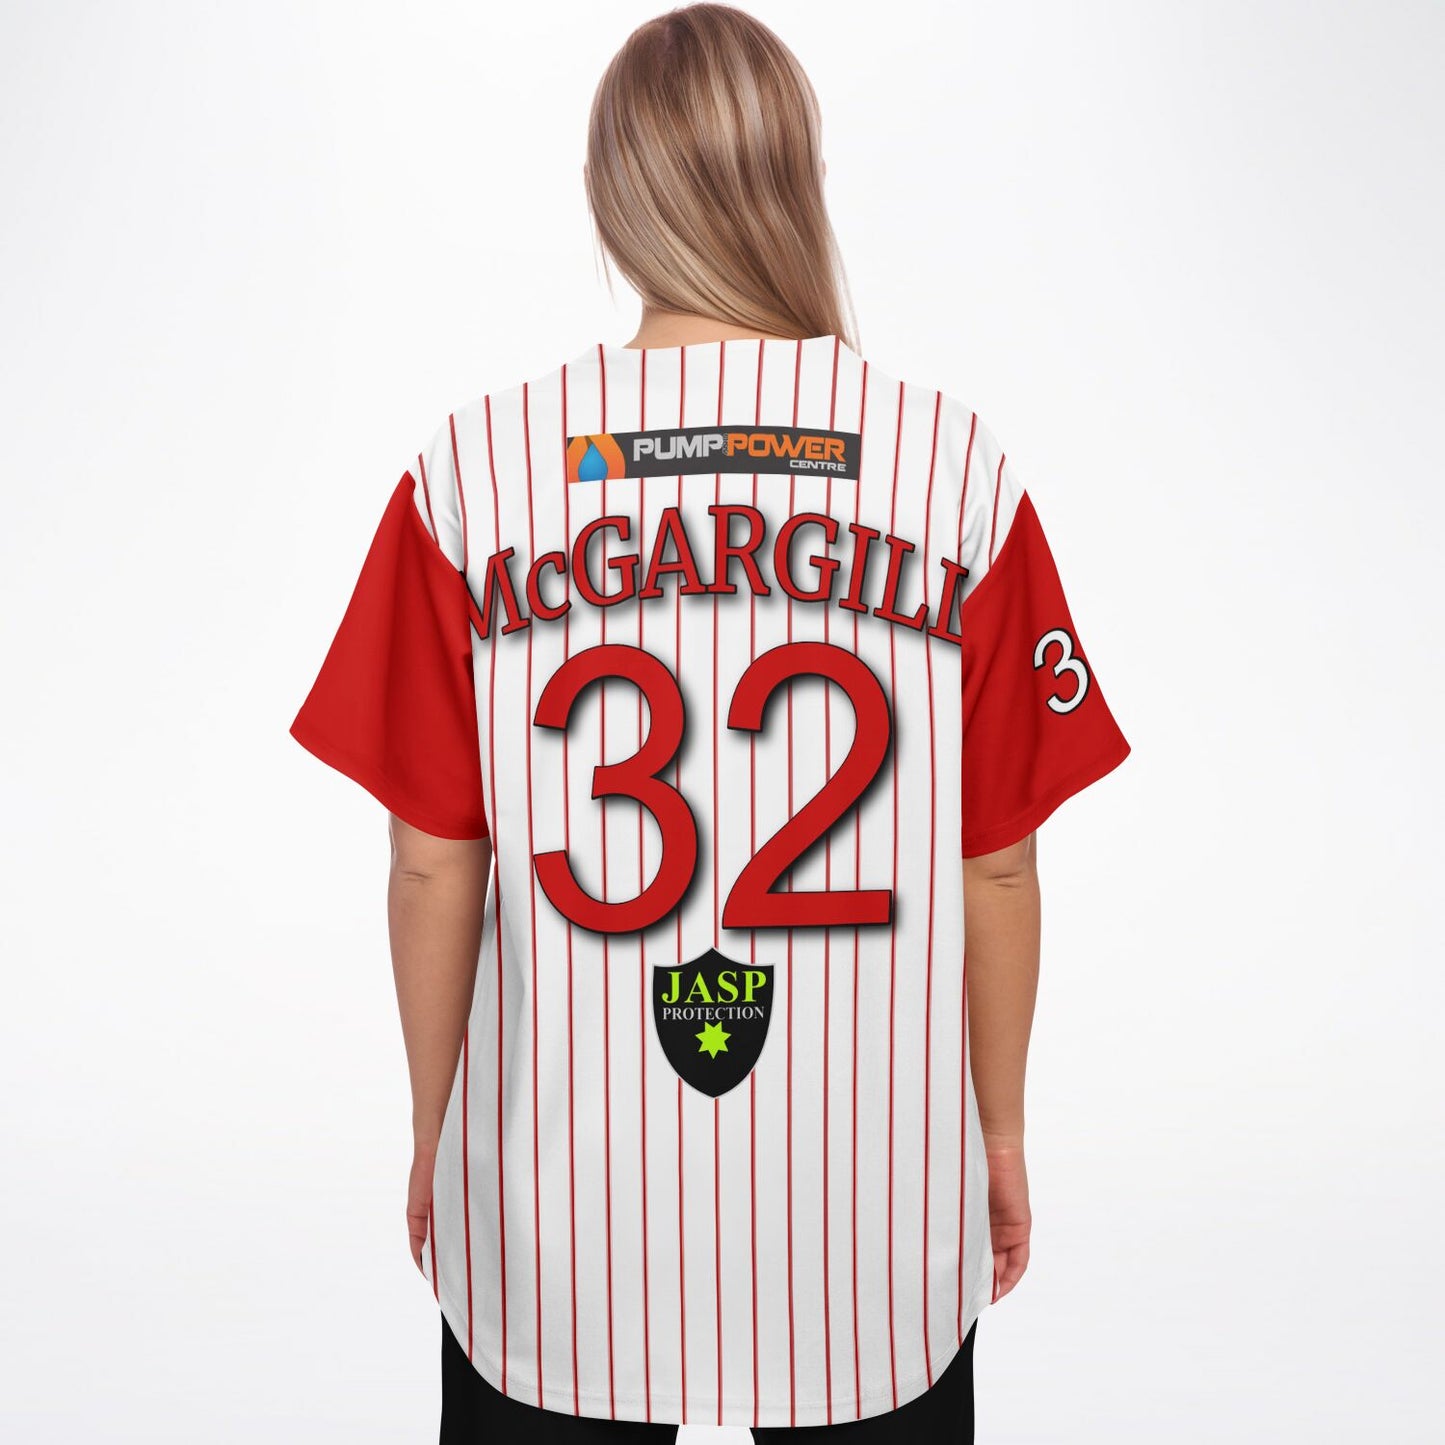 Gavin McGargill #32 Demons Baseball Jersey - Home